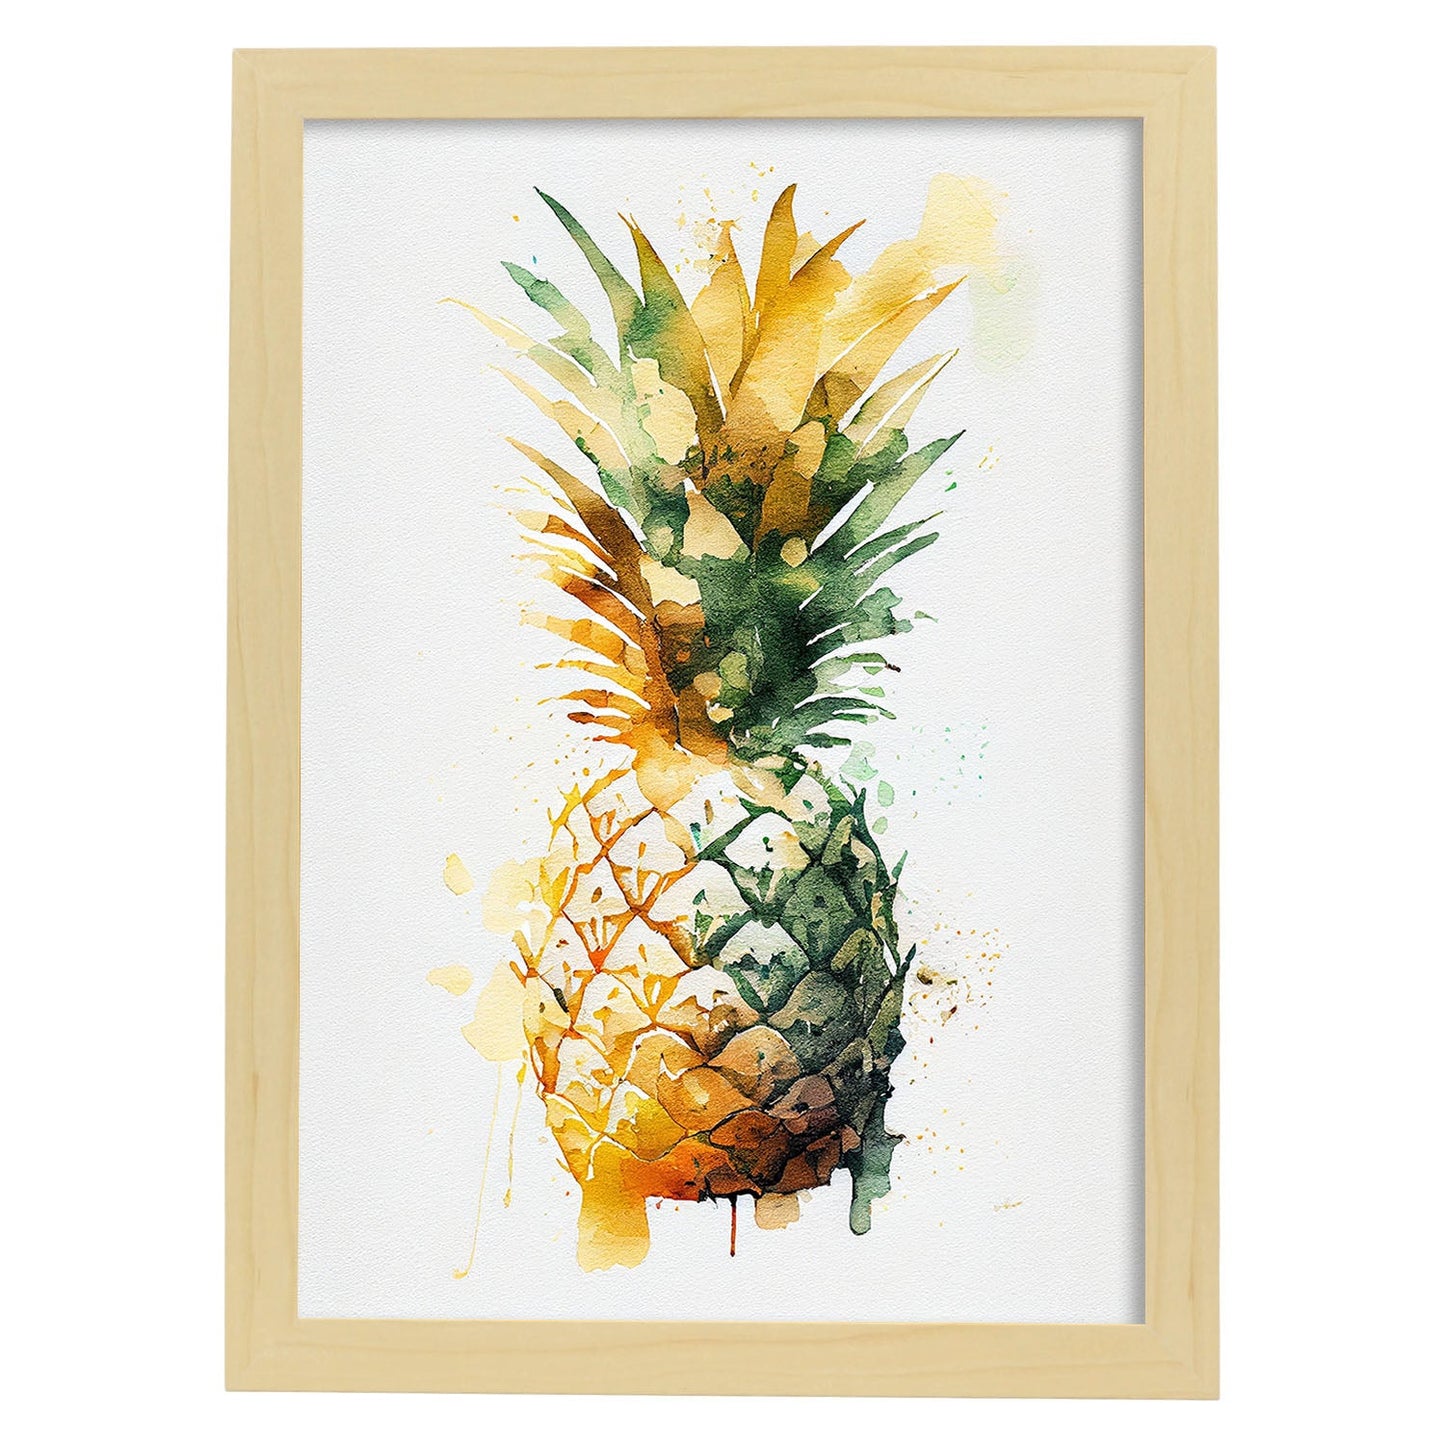 Nacnic minimalist Pineapple_2. Aesthetic Wall Art Prints for Bedroom or Living Room Design.-Artwork-Nacnic-A4-Marco Madera Clara-Nacnic Estudio SL